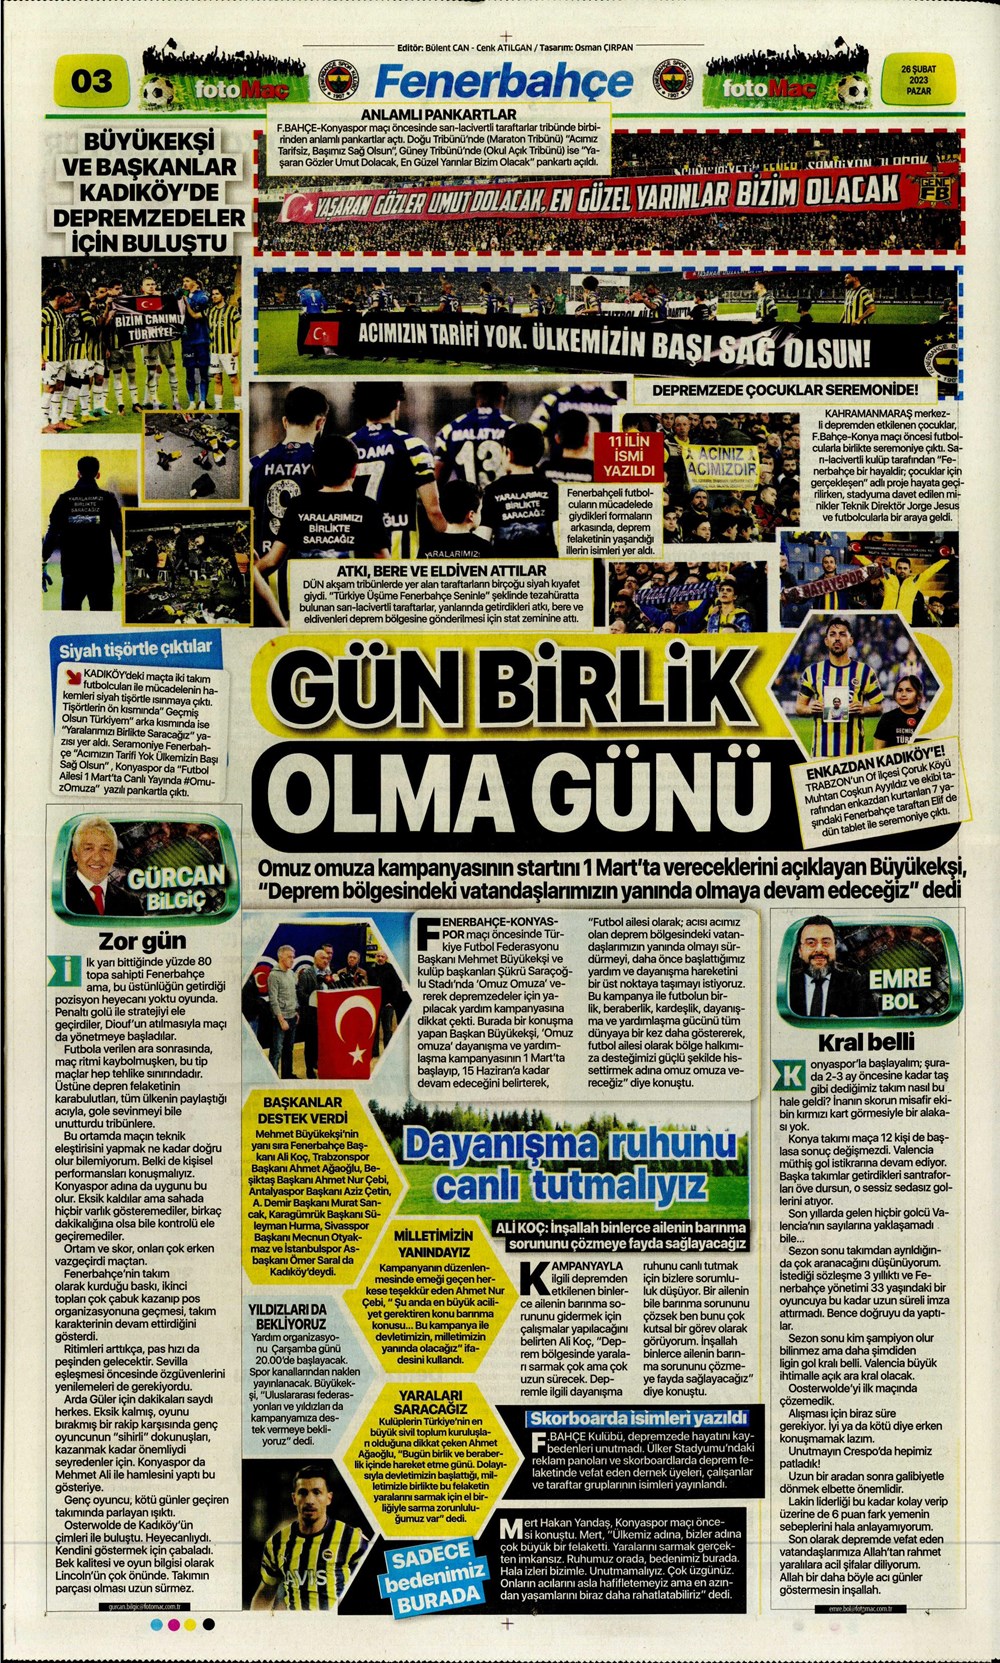 "Valenci'ağa' böyle istedi" - Sporun manşetleri  - 11. Foto